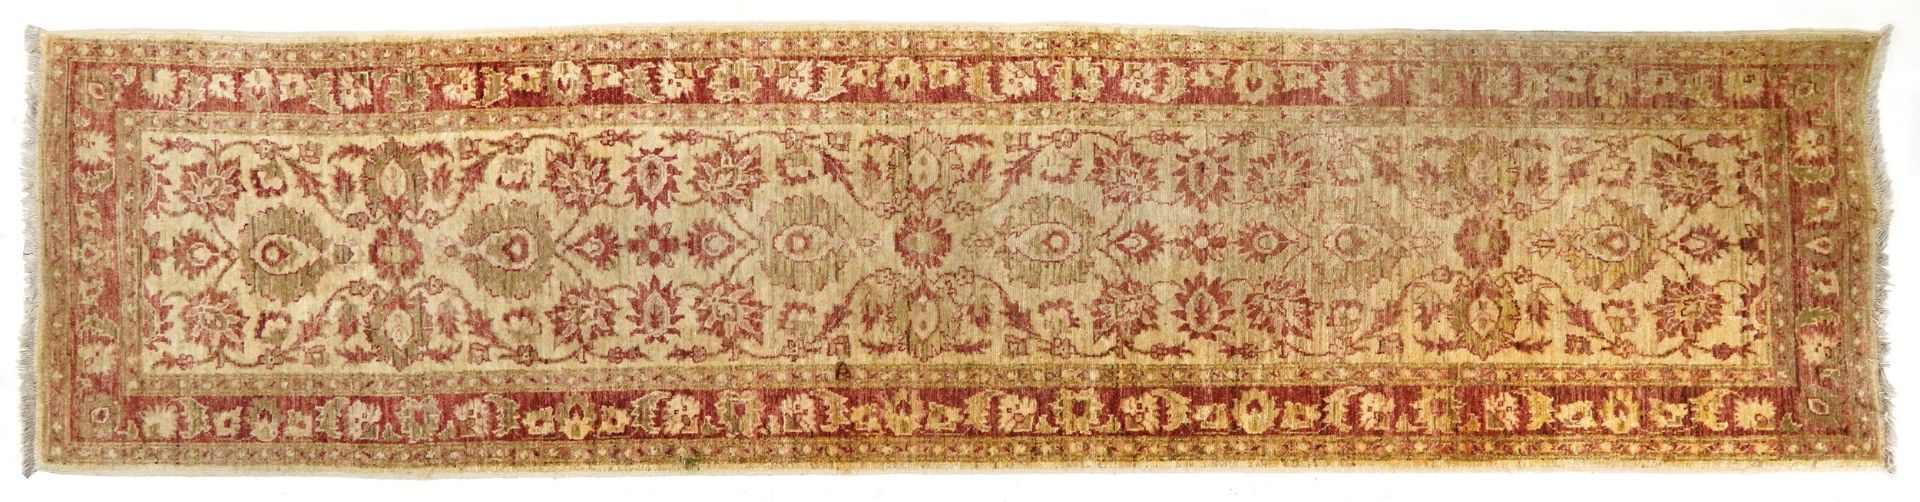 Afghan Ziegler cream and red ground carpet runner, 300cm x 78cm